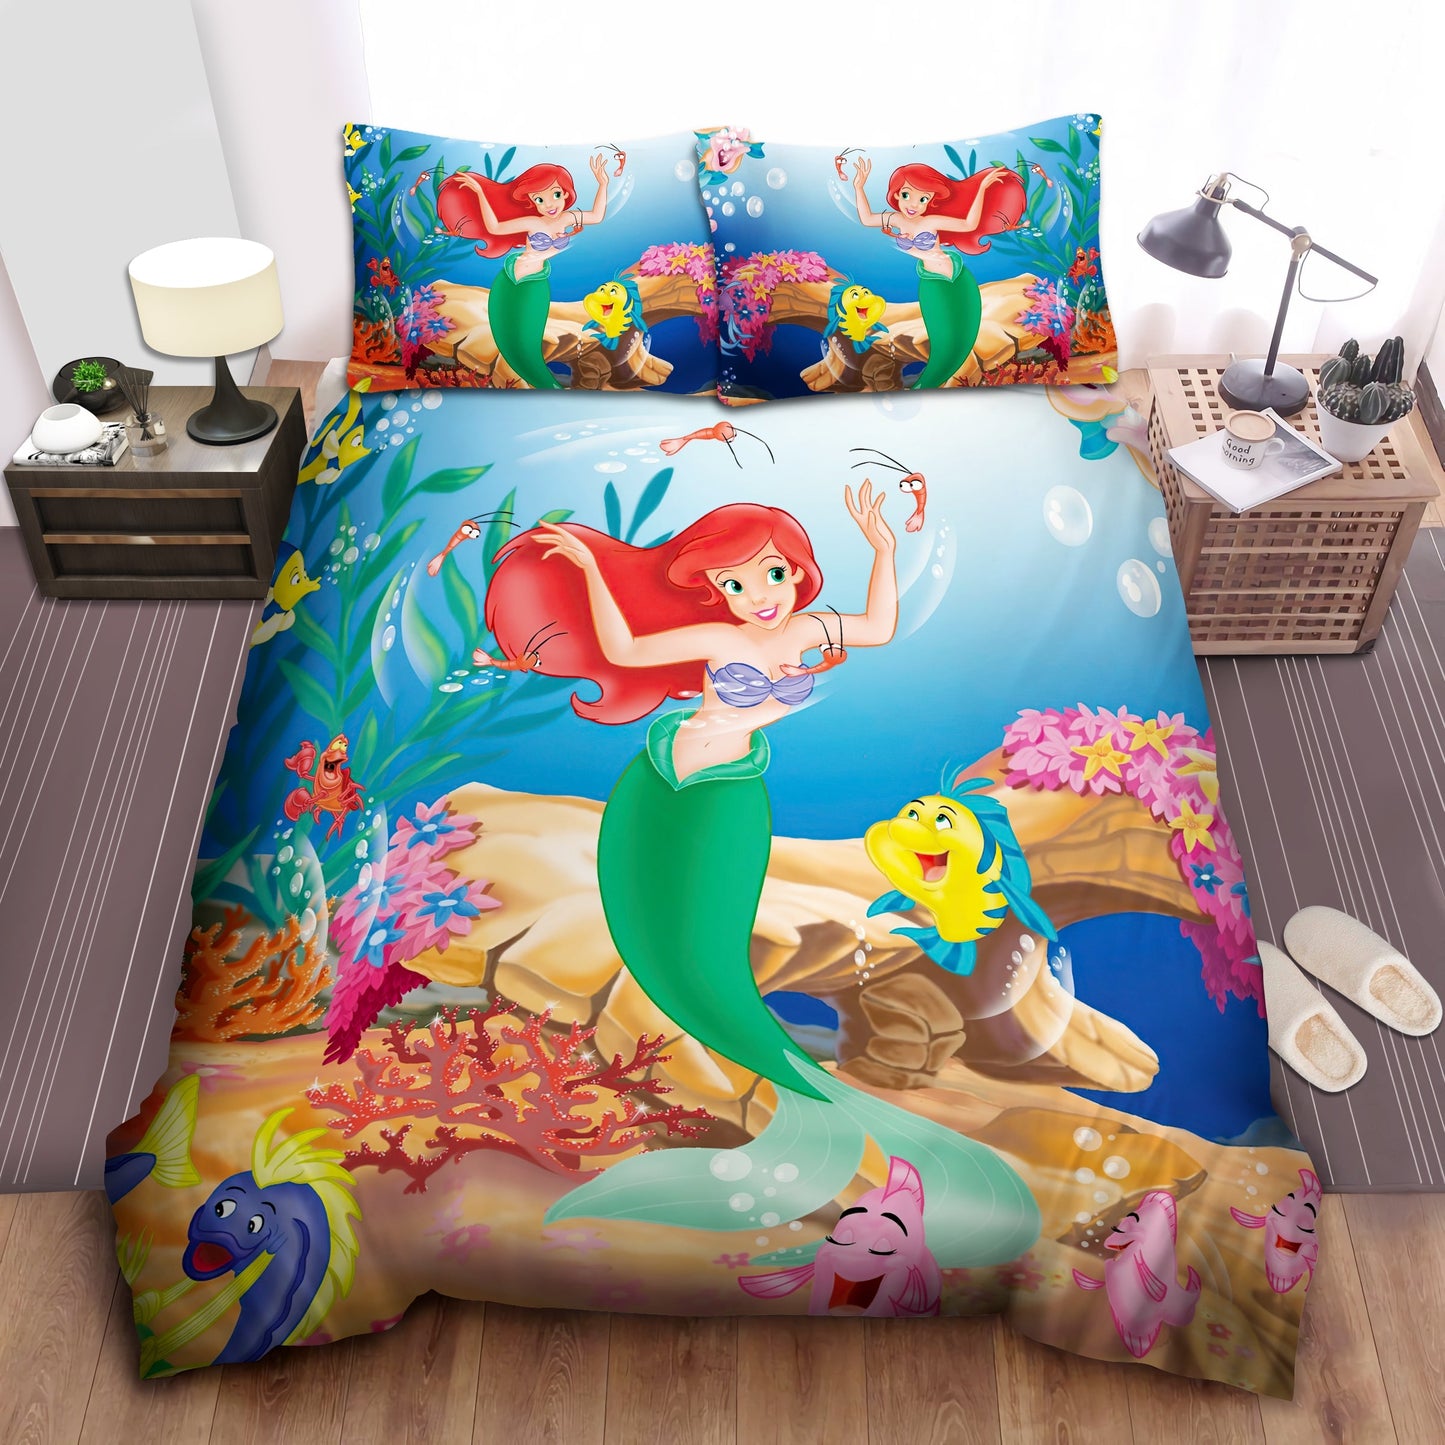 Little Mermaid Bedding Set DN Ariel The Little Mermaid In The Ocean Duvet Covers Blue Unique Gift